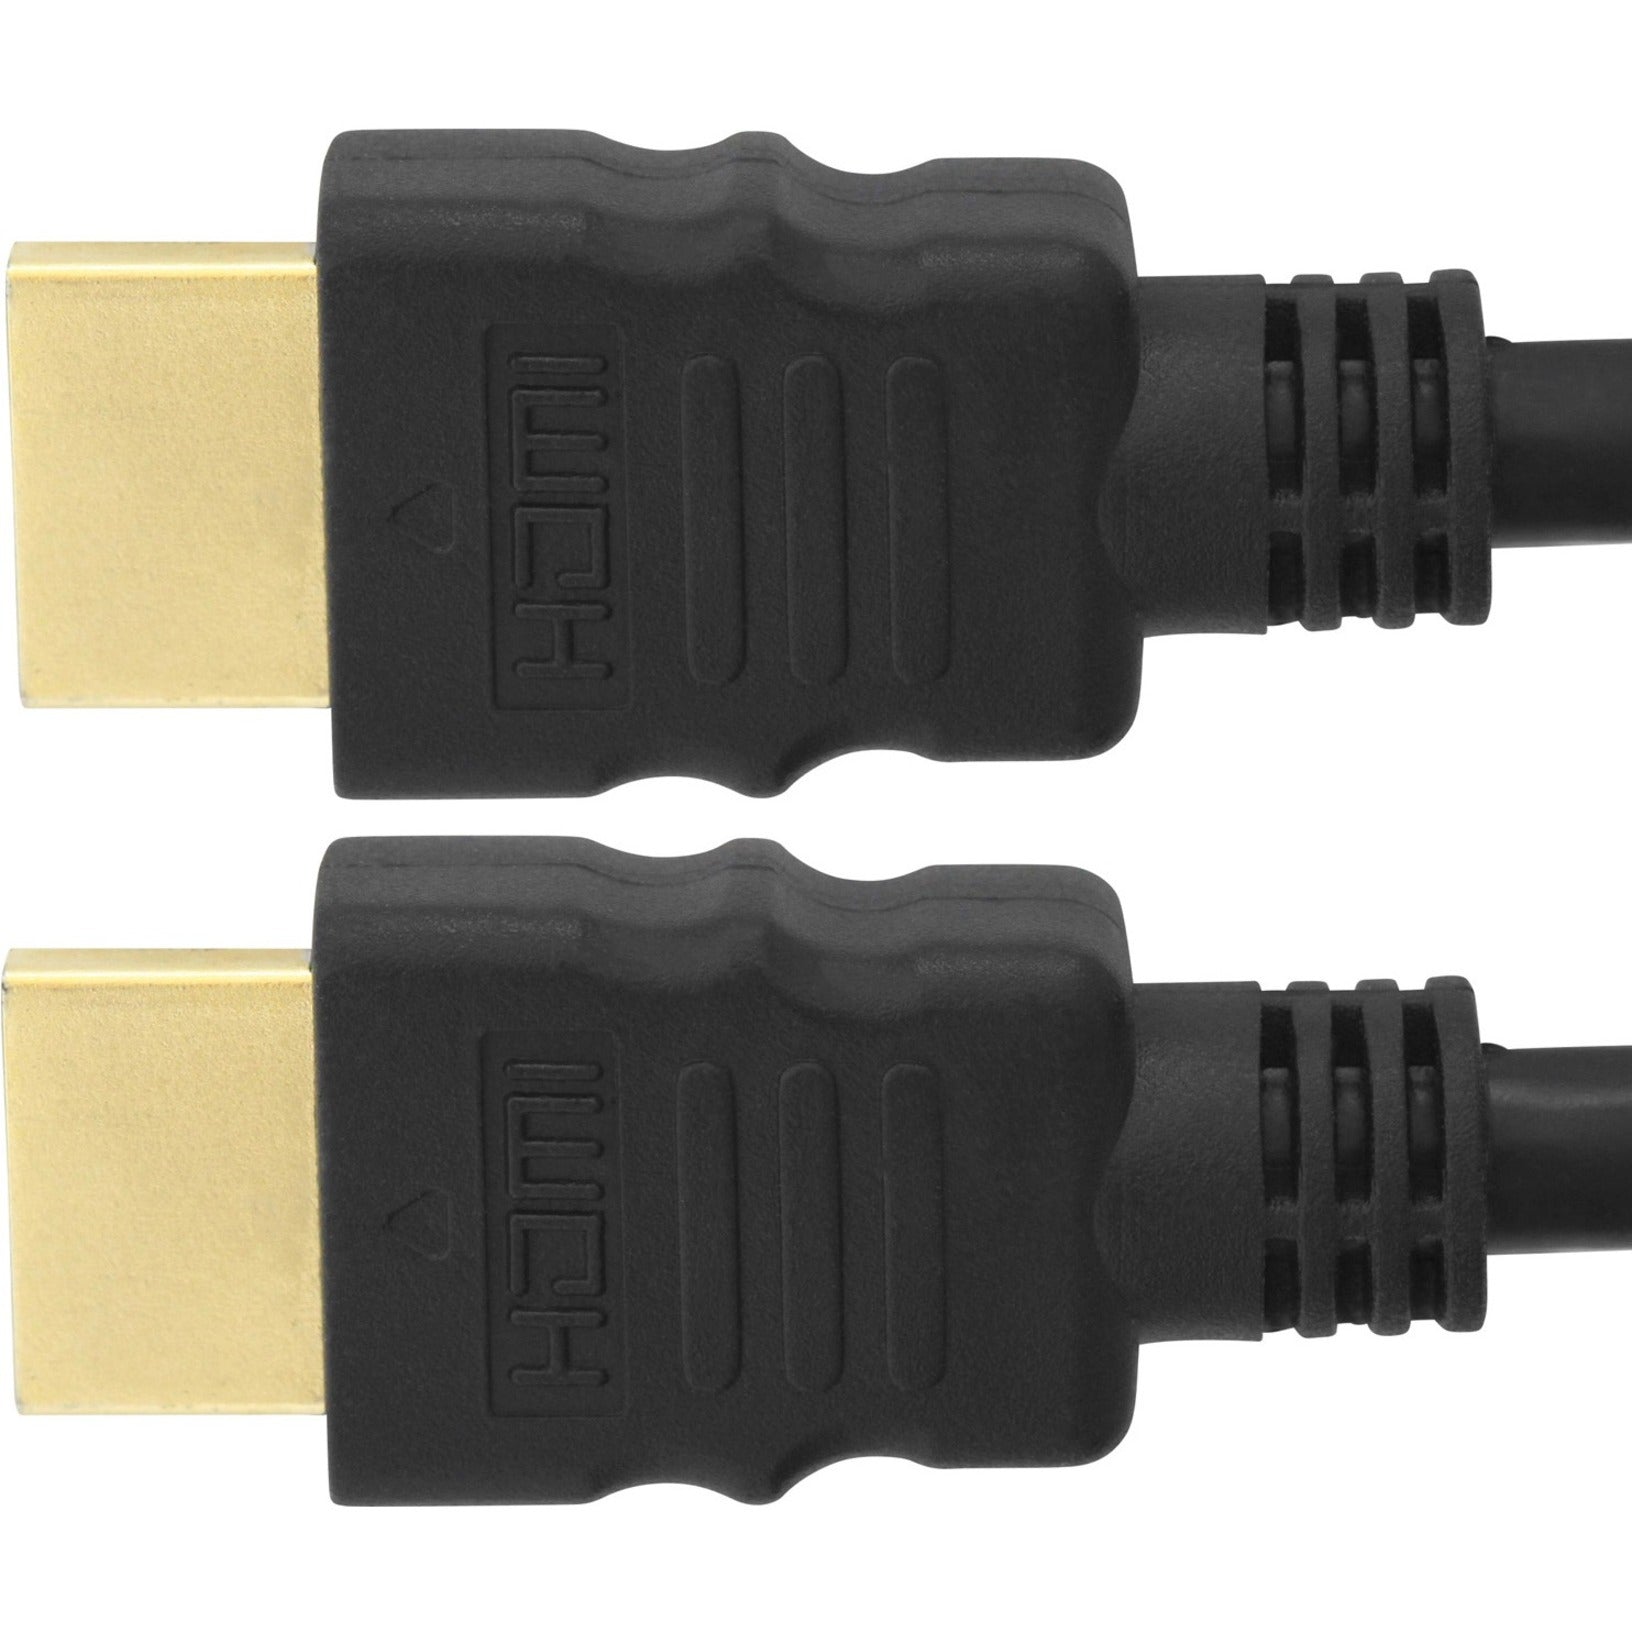 4XEM 4XHDMIMM3FT Cable HDMI de alta velocidad de 3 pies 1m 1080p 3D Ethernet Canal de Retorno de Audio. Marca: 4XEM - Traducir la palabra de la marca: 4XEM es cuatro por em la marca fue traducida como: cuatro por em.